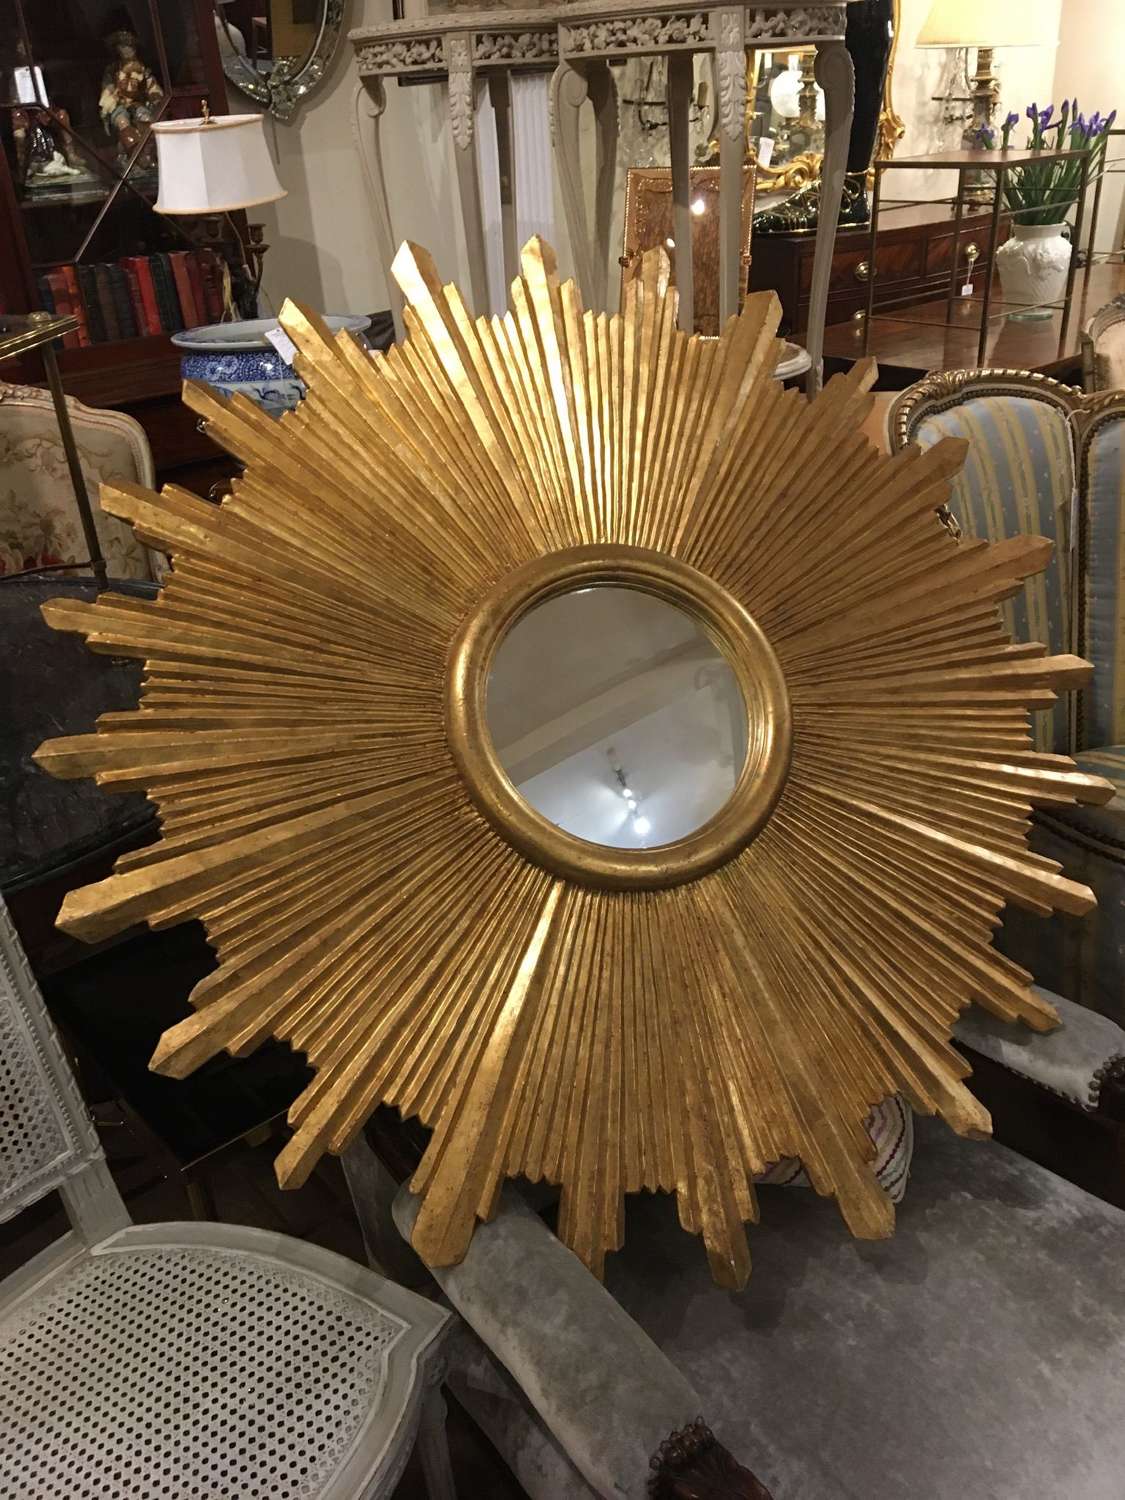 Very large sunburst mirror